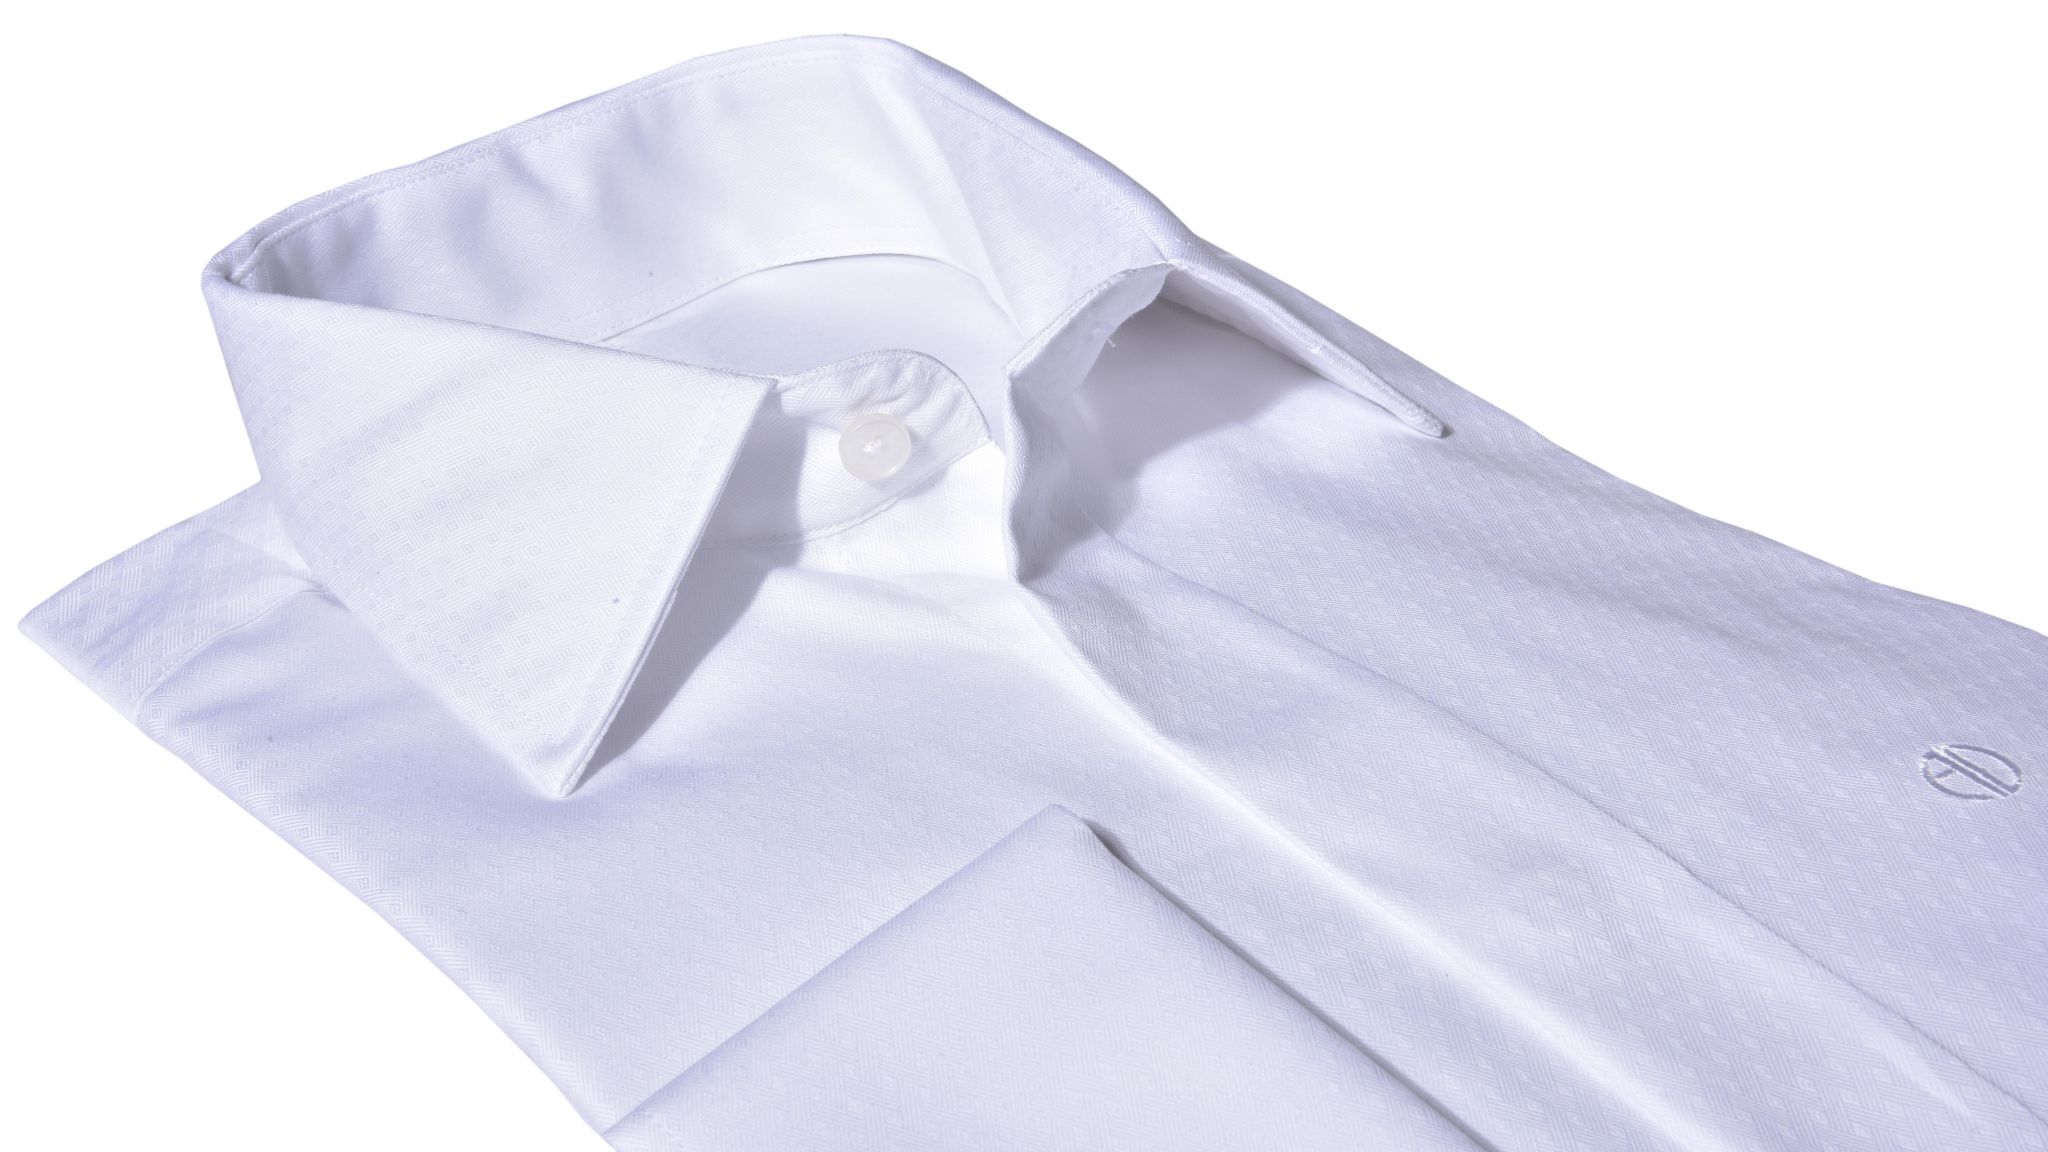 White formal Slim Fit shirt - Shirts - E-shop | alaindelon.co.uk